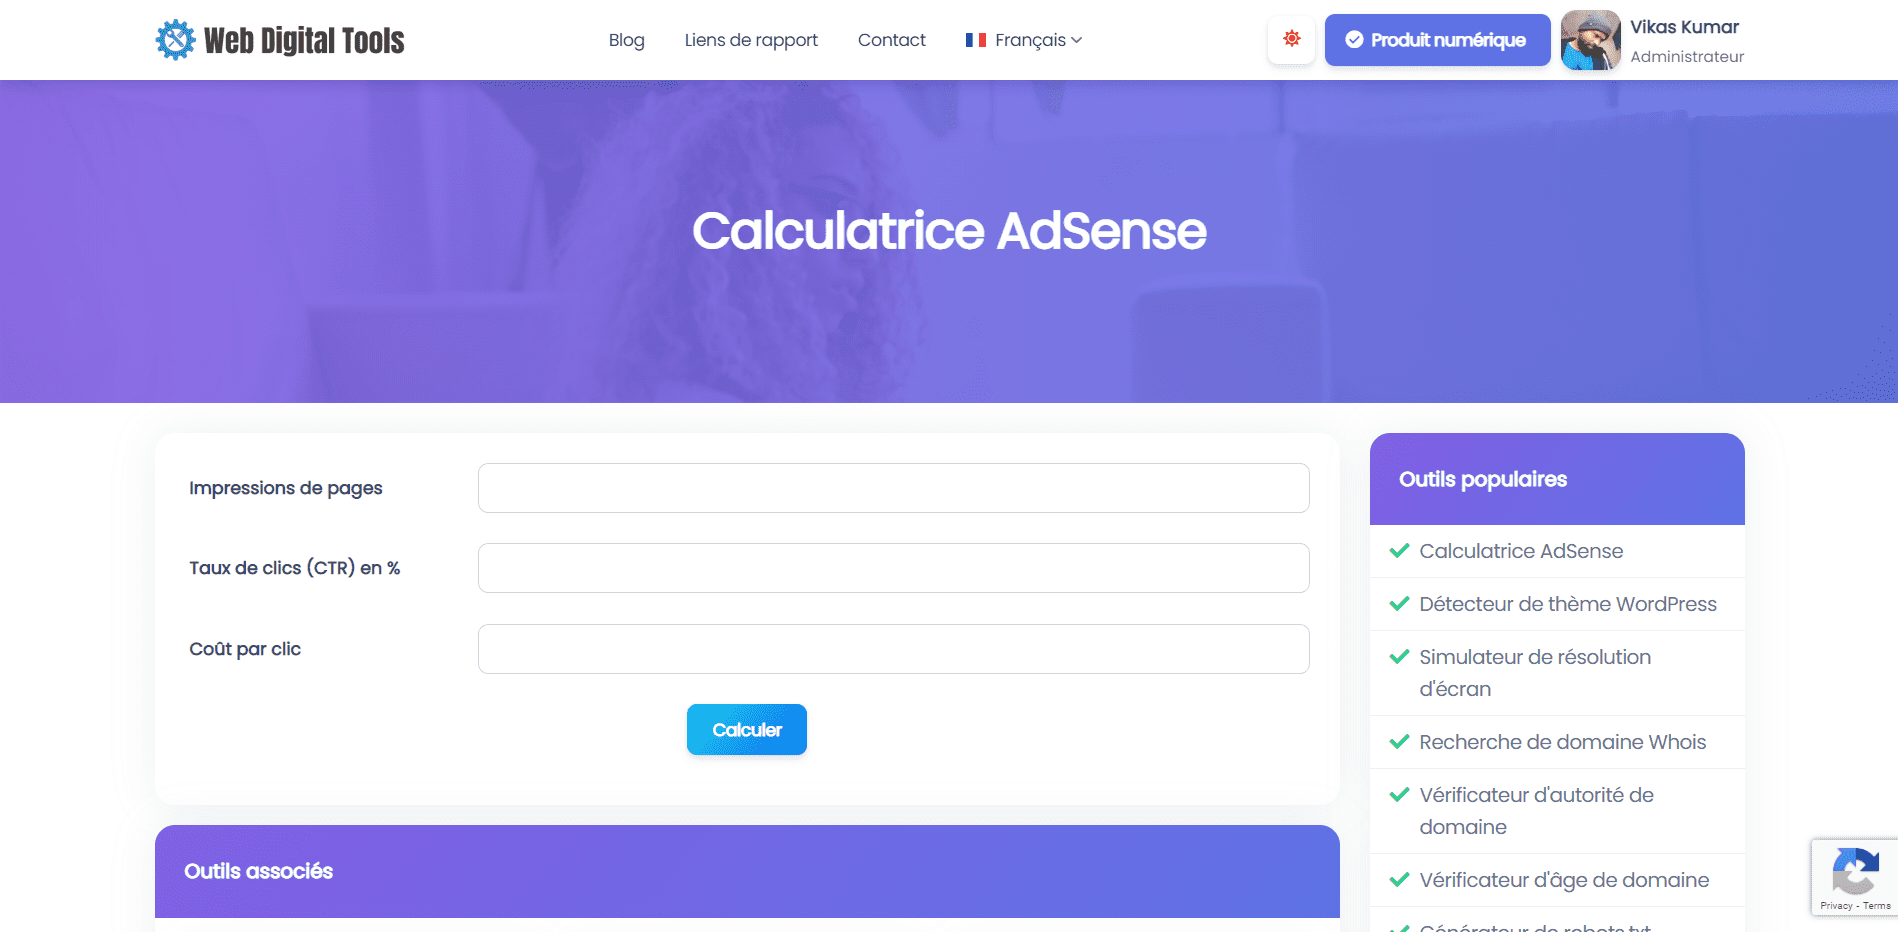 Calculatrice AdSense